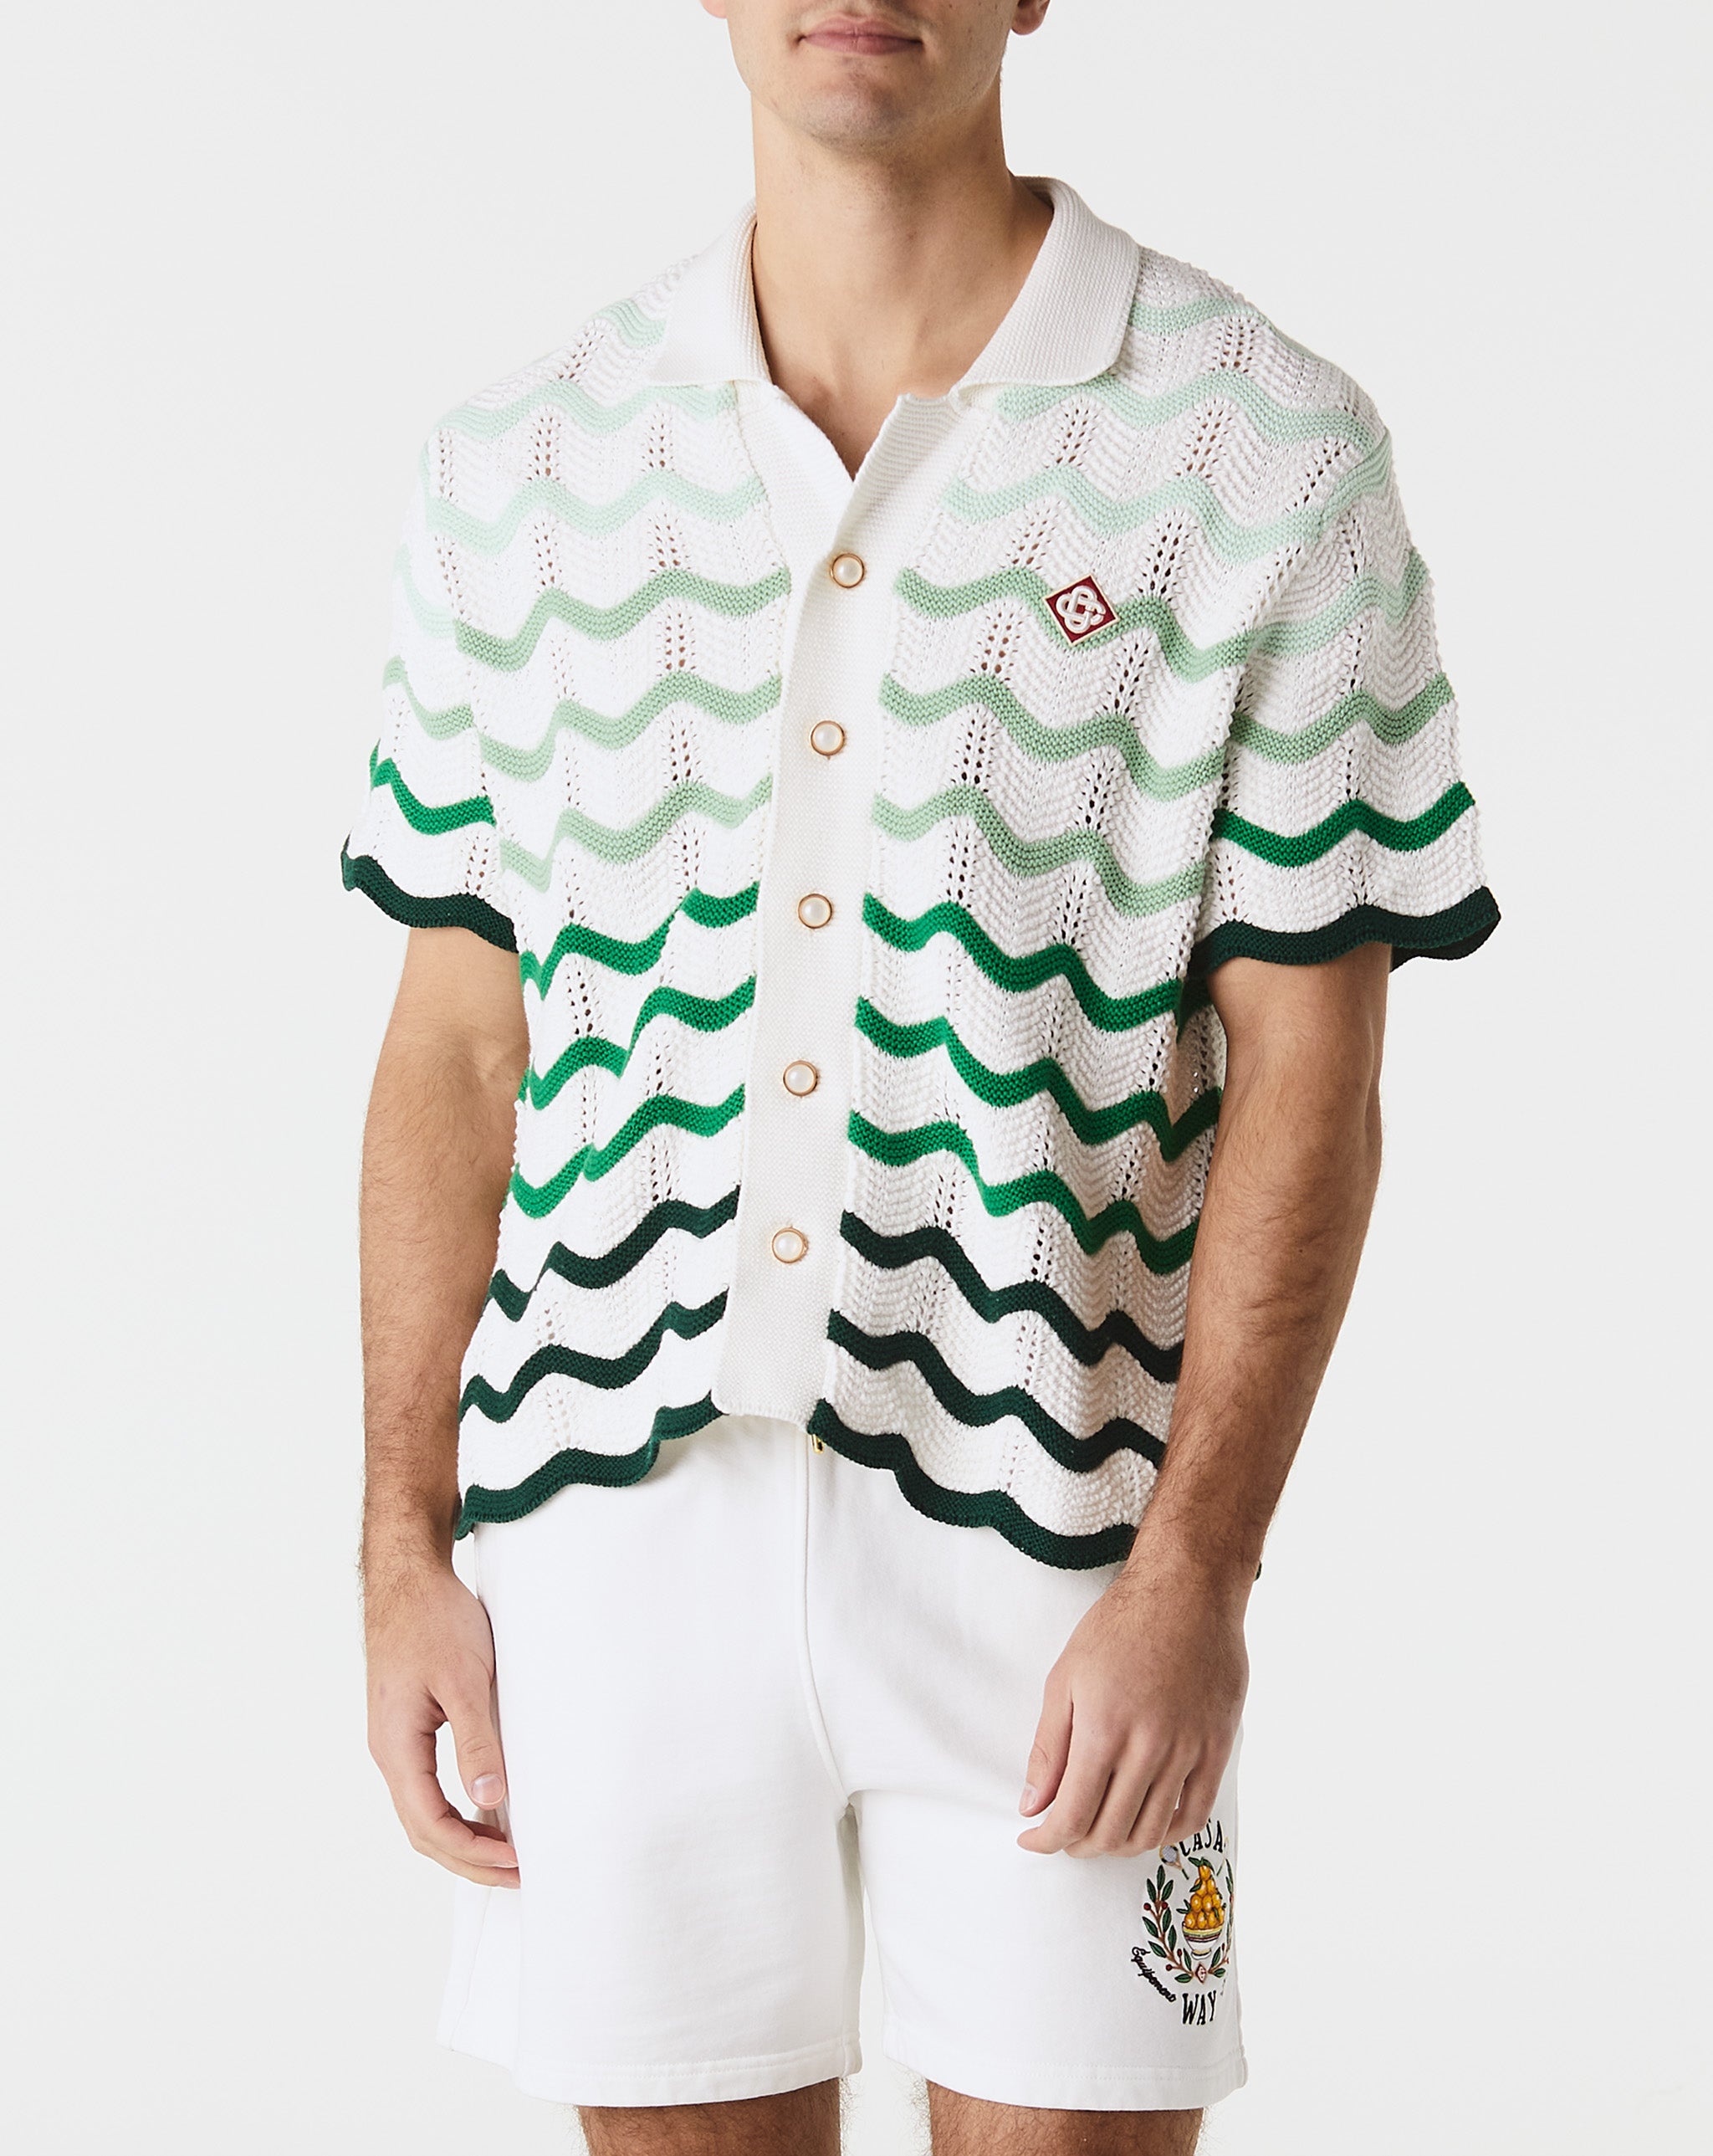 Casablanca Familiar Boys Polo CAMEL shirts for Kids  - Cheap Urlfreeze Jordan outlet